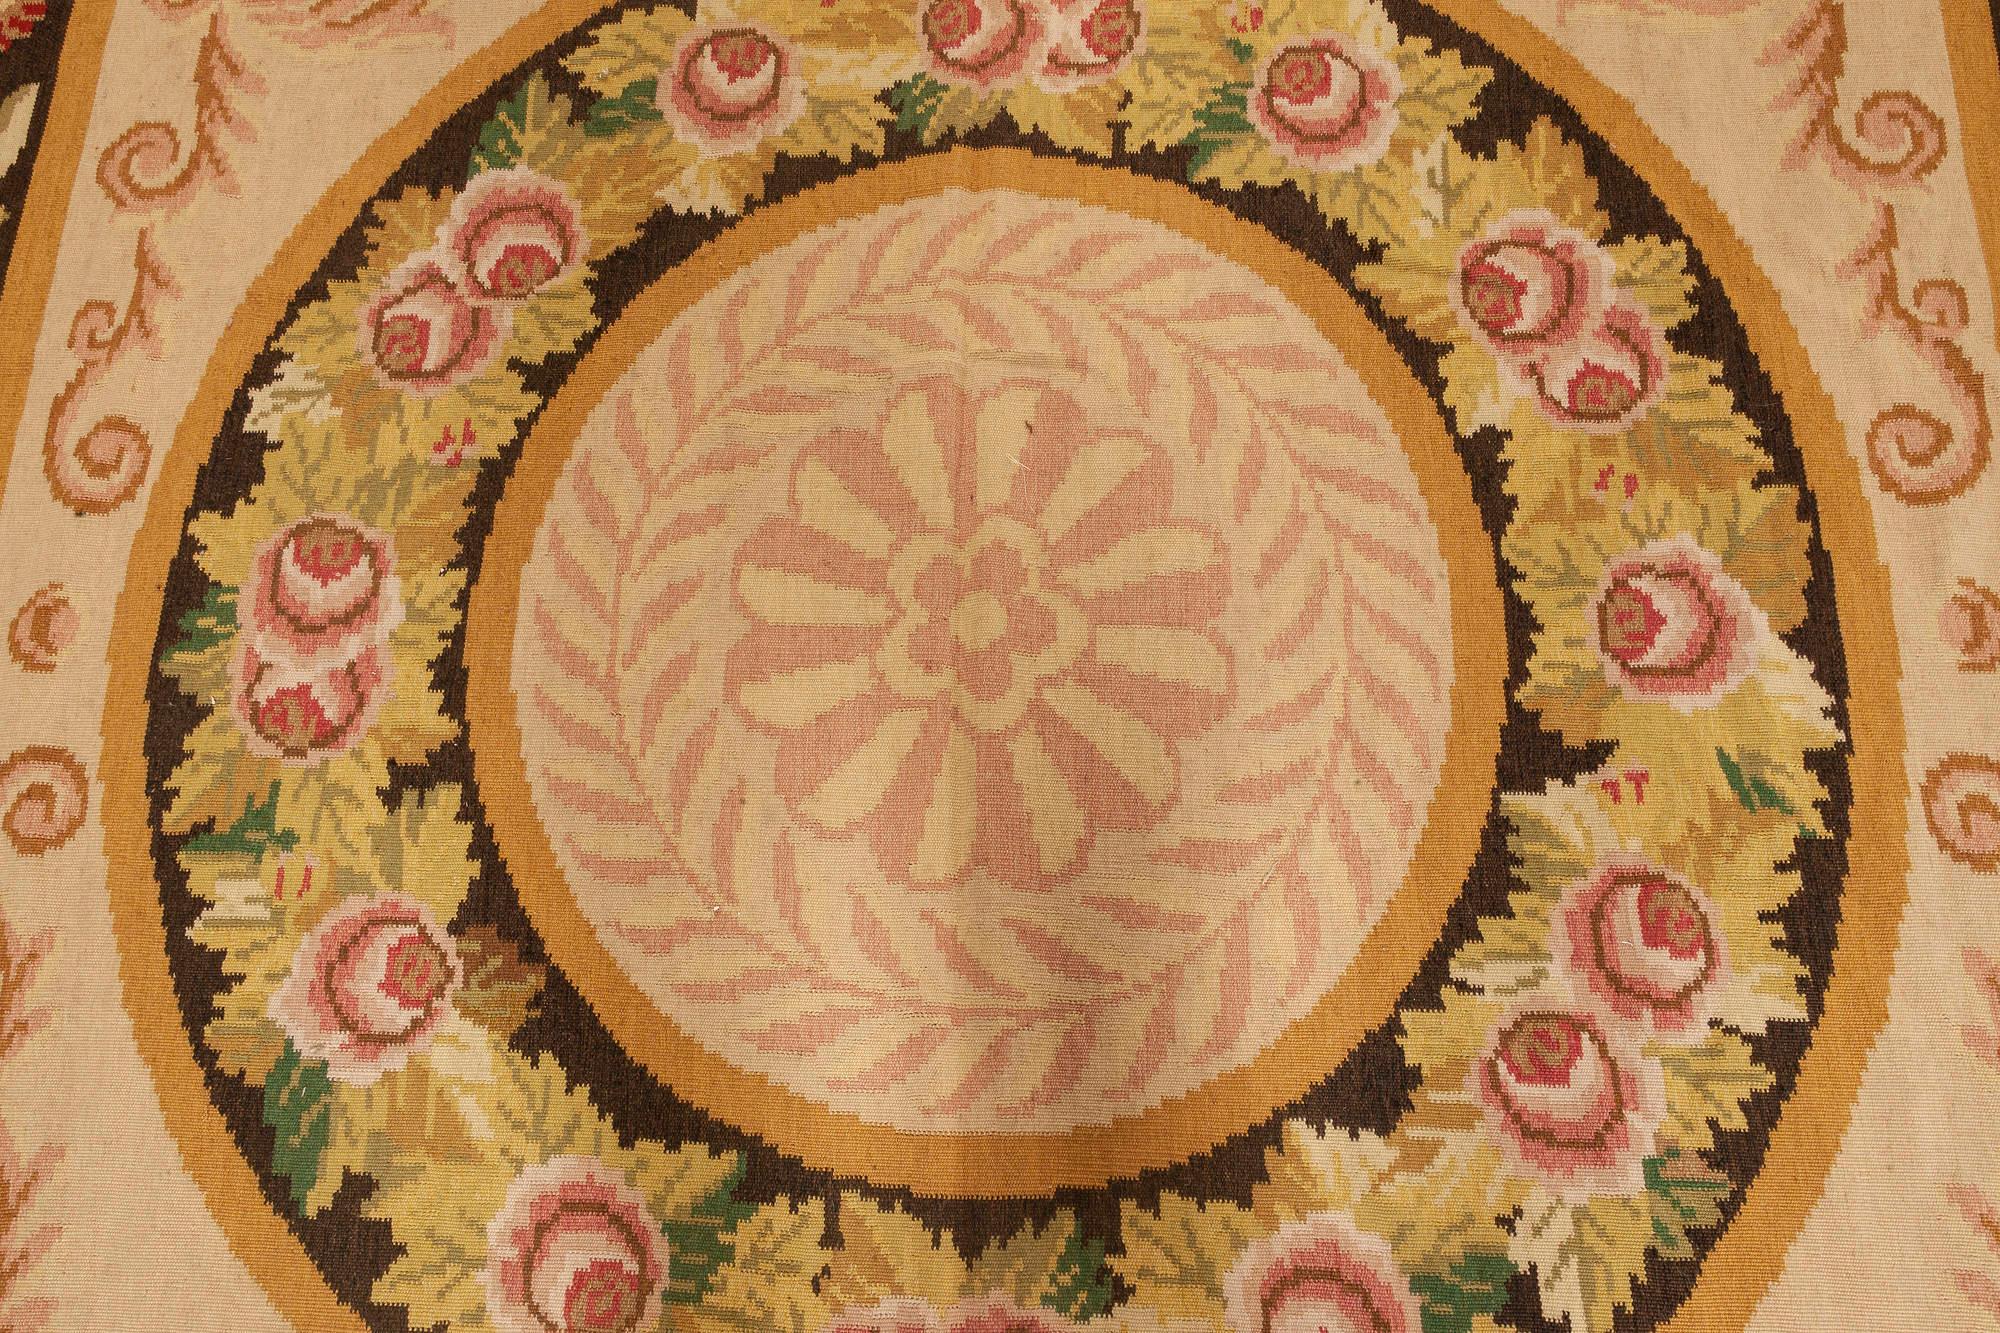 Modern Bessarabian floral design handmade wool rug by Doris Leslie Blau.
Size: 12.3